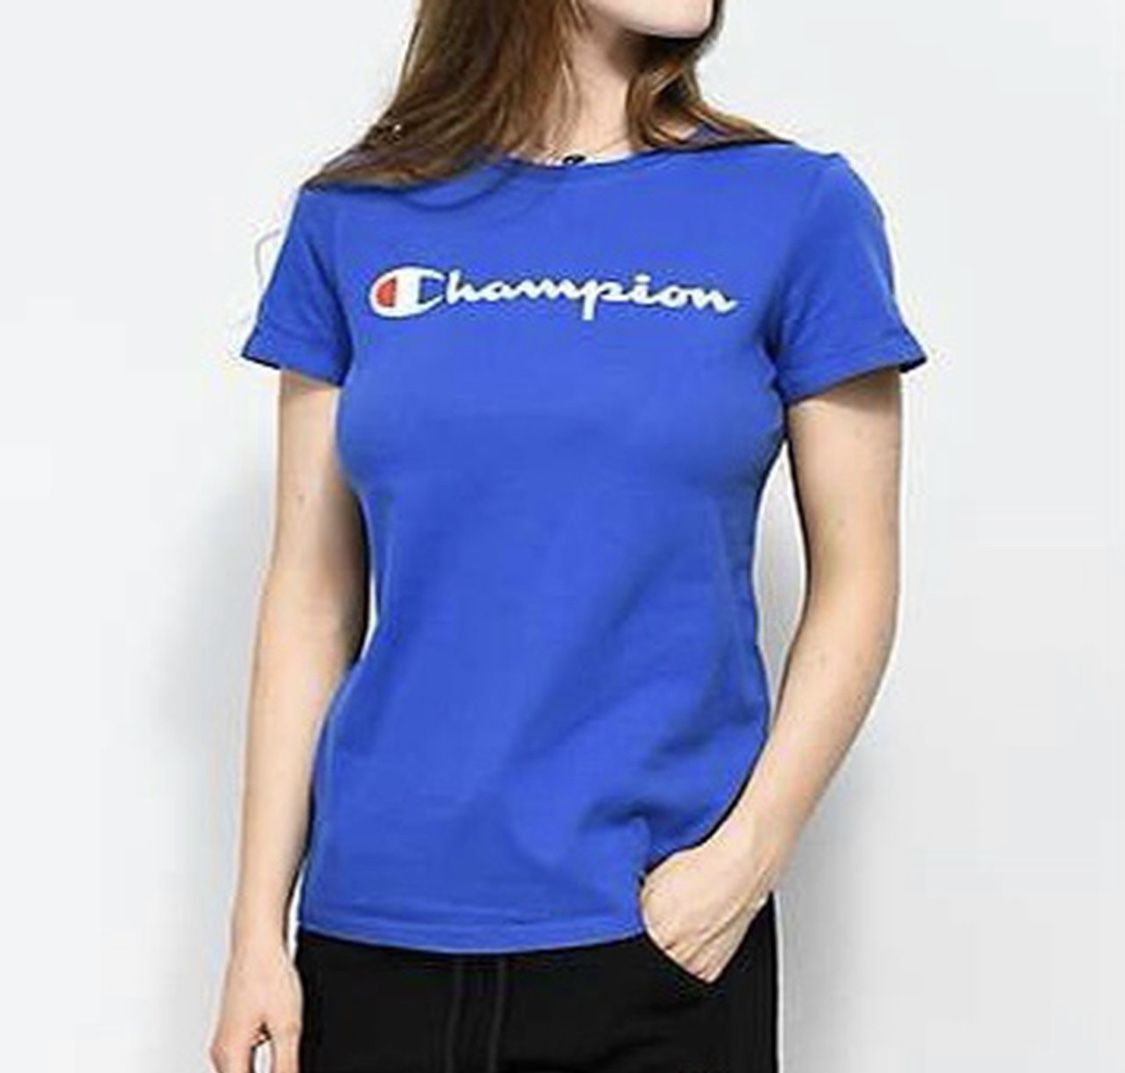 Blue Champion Shirt 🦋 